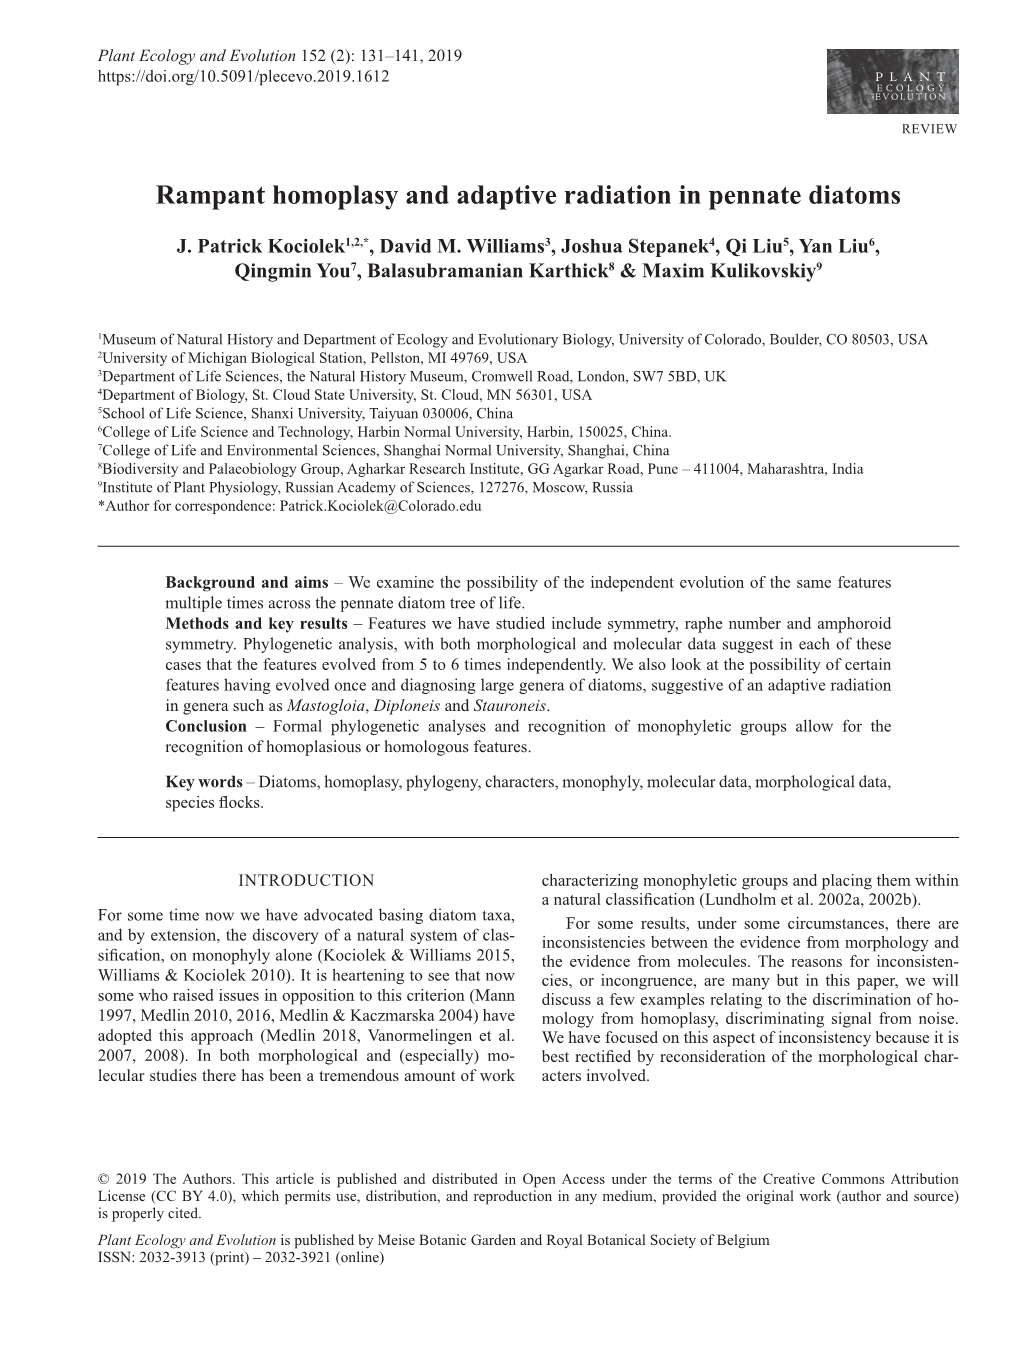 Rampant Homoplasy and Adaptive Radiation in Pennate Diatoms